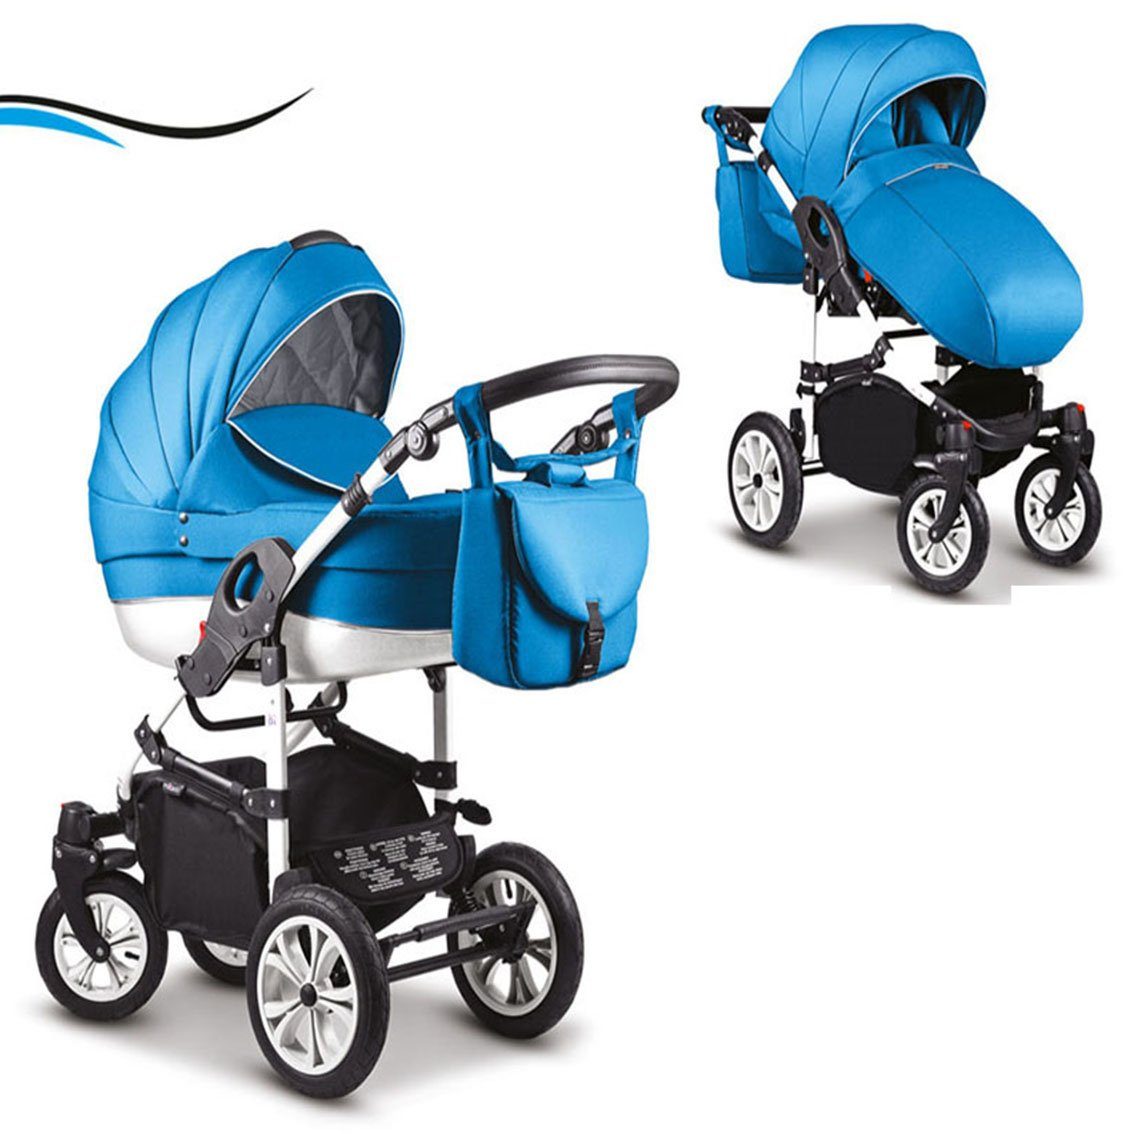 babies-on-wheels Kombi-Kinderwagen 2 in 1 Kinderwagen-Set Cosmo - 13 Teile - in 16 Farben Türkis-Weiß | Kombikinderwagen